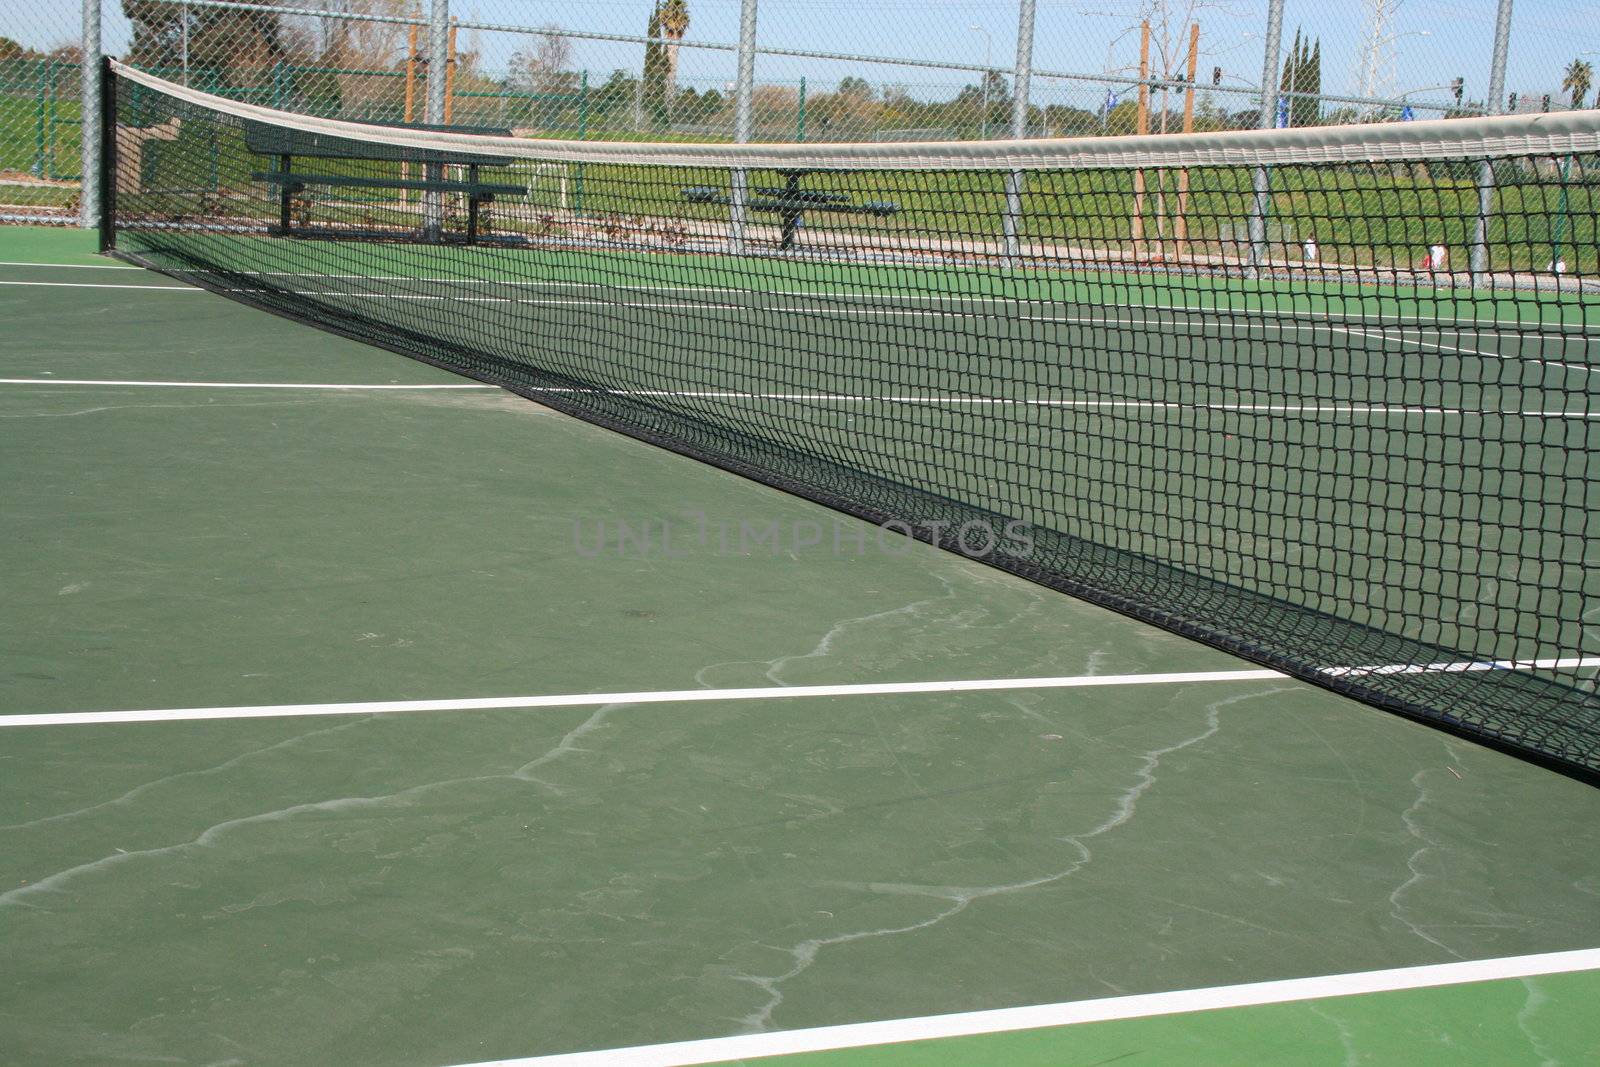 Tennis Court by MichaelFelix